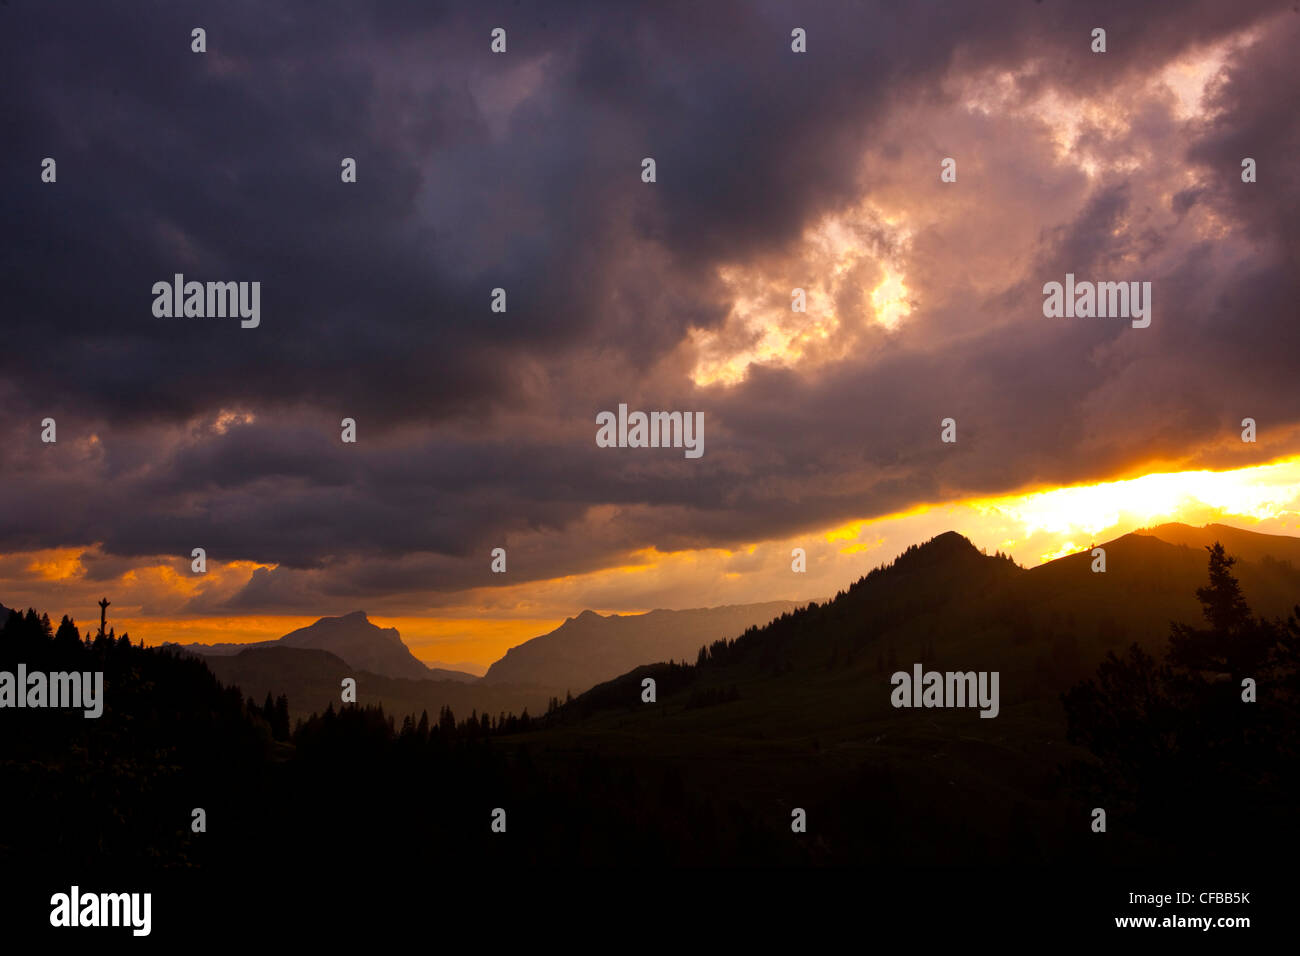 Tree, alberi, scenario, meteo, nuvole, cloud, del cantone di Nidvaldo, Svizzera, Europa, Glaubenbüelen, sera, silhouette Foto Stock